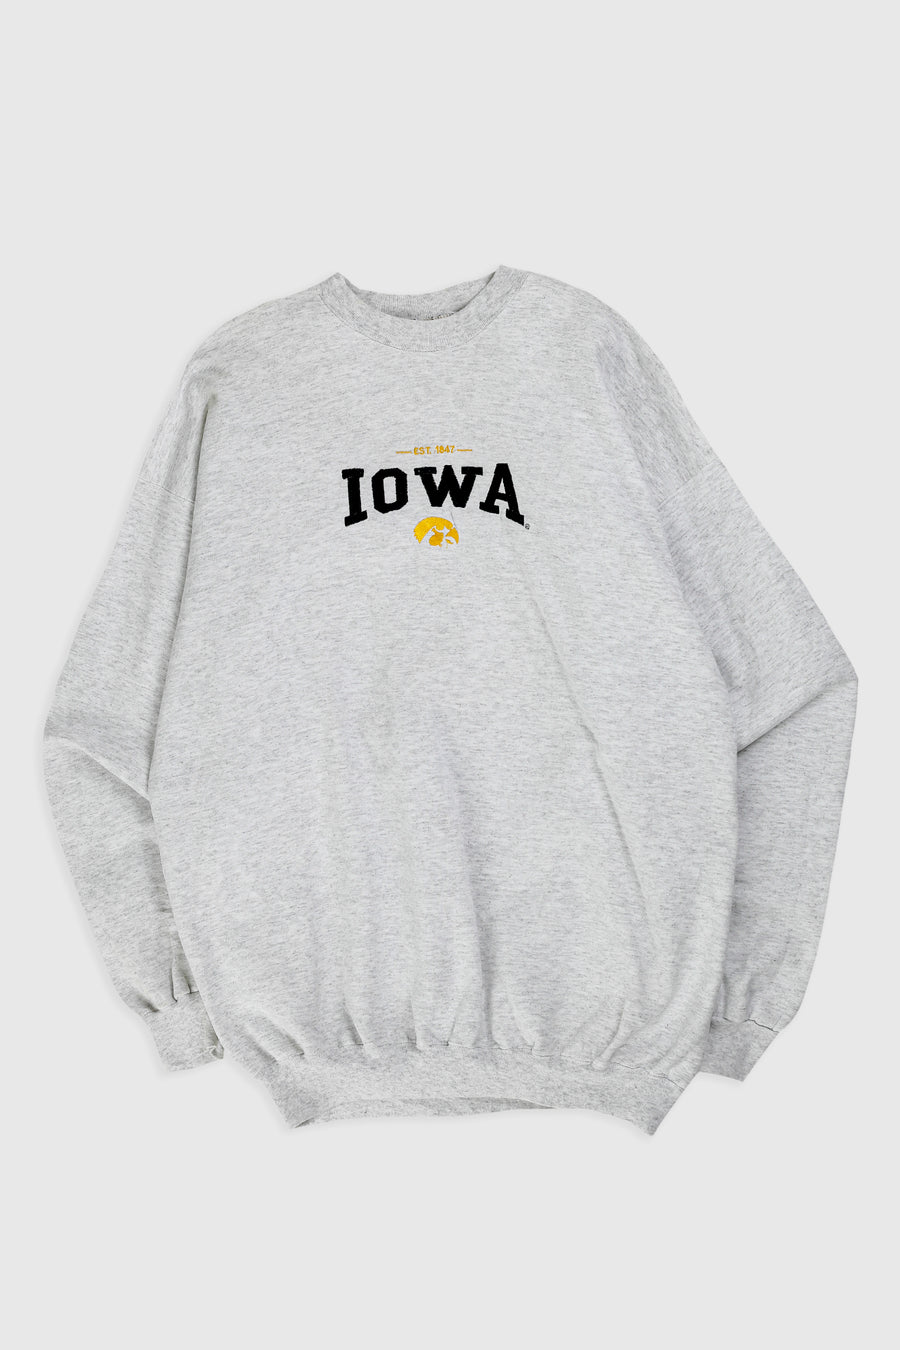 Vintage Iowa Hawkeyes Sweatshirt - XL